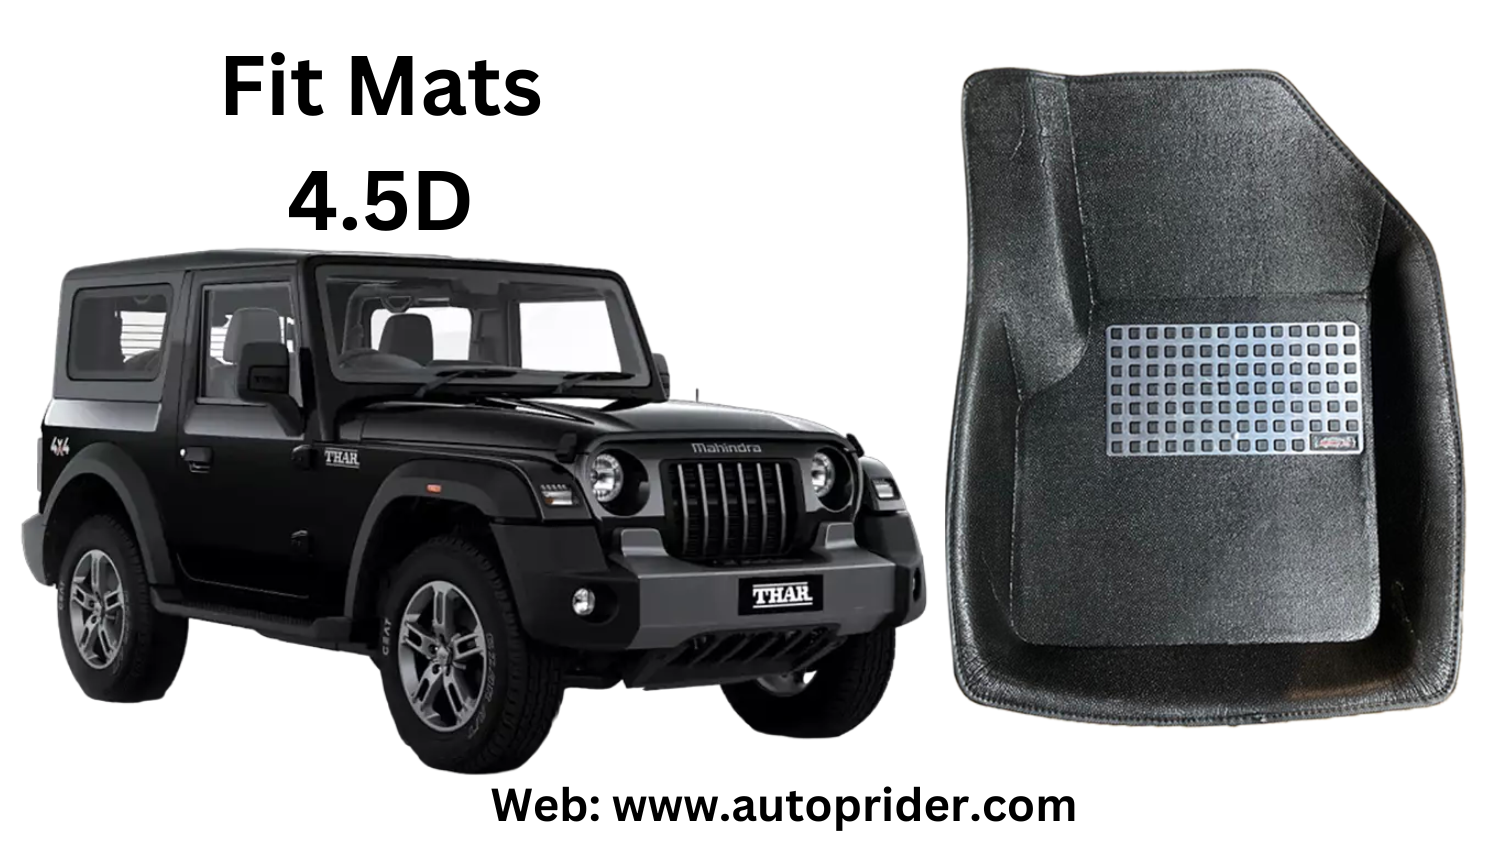 Autoprider | Fit Mats 4.5D Economy Car Mats for Mahindra New Thar